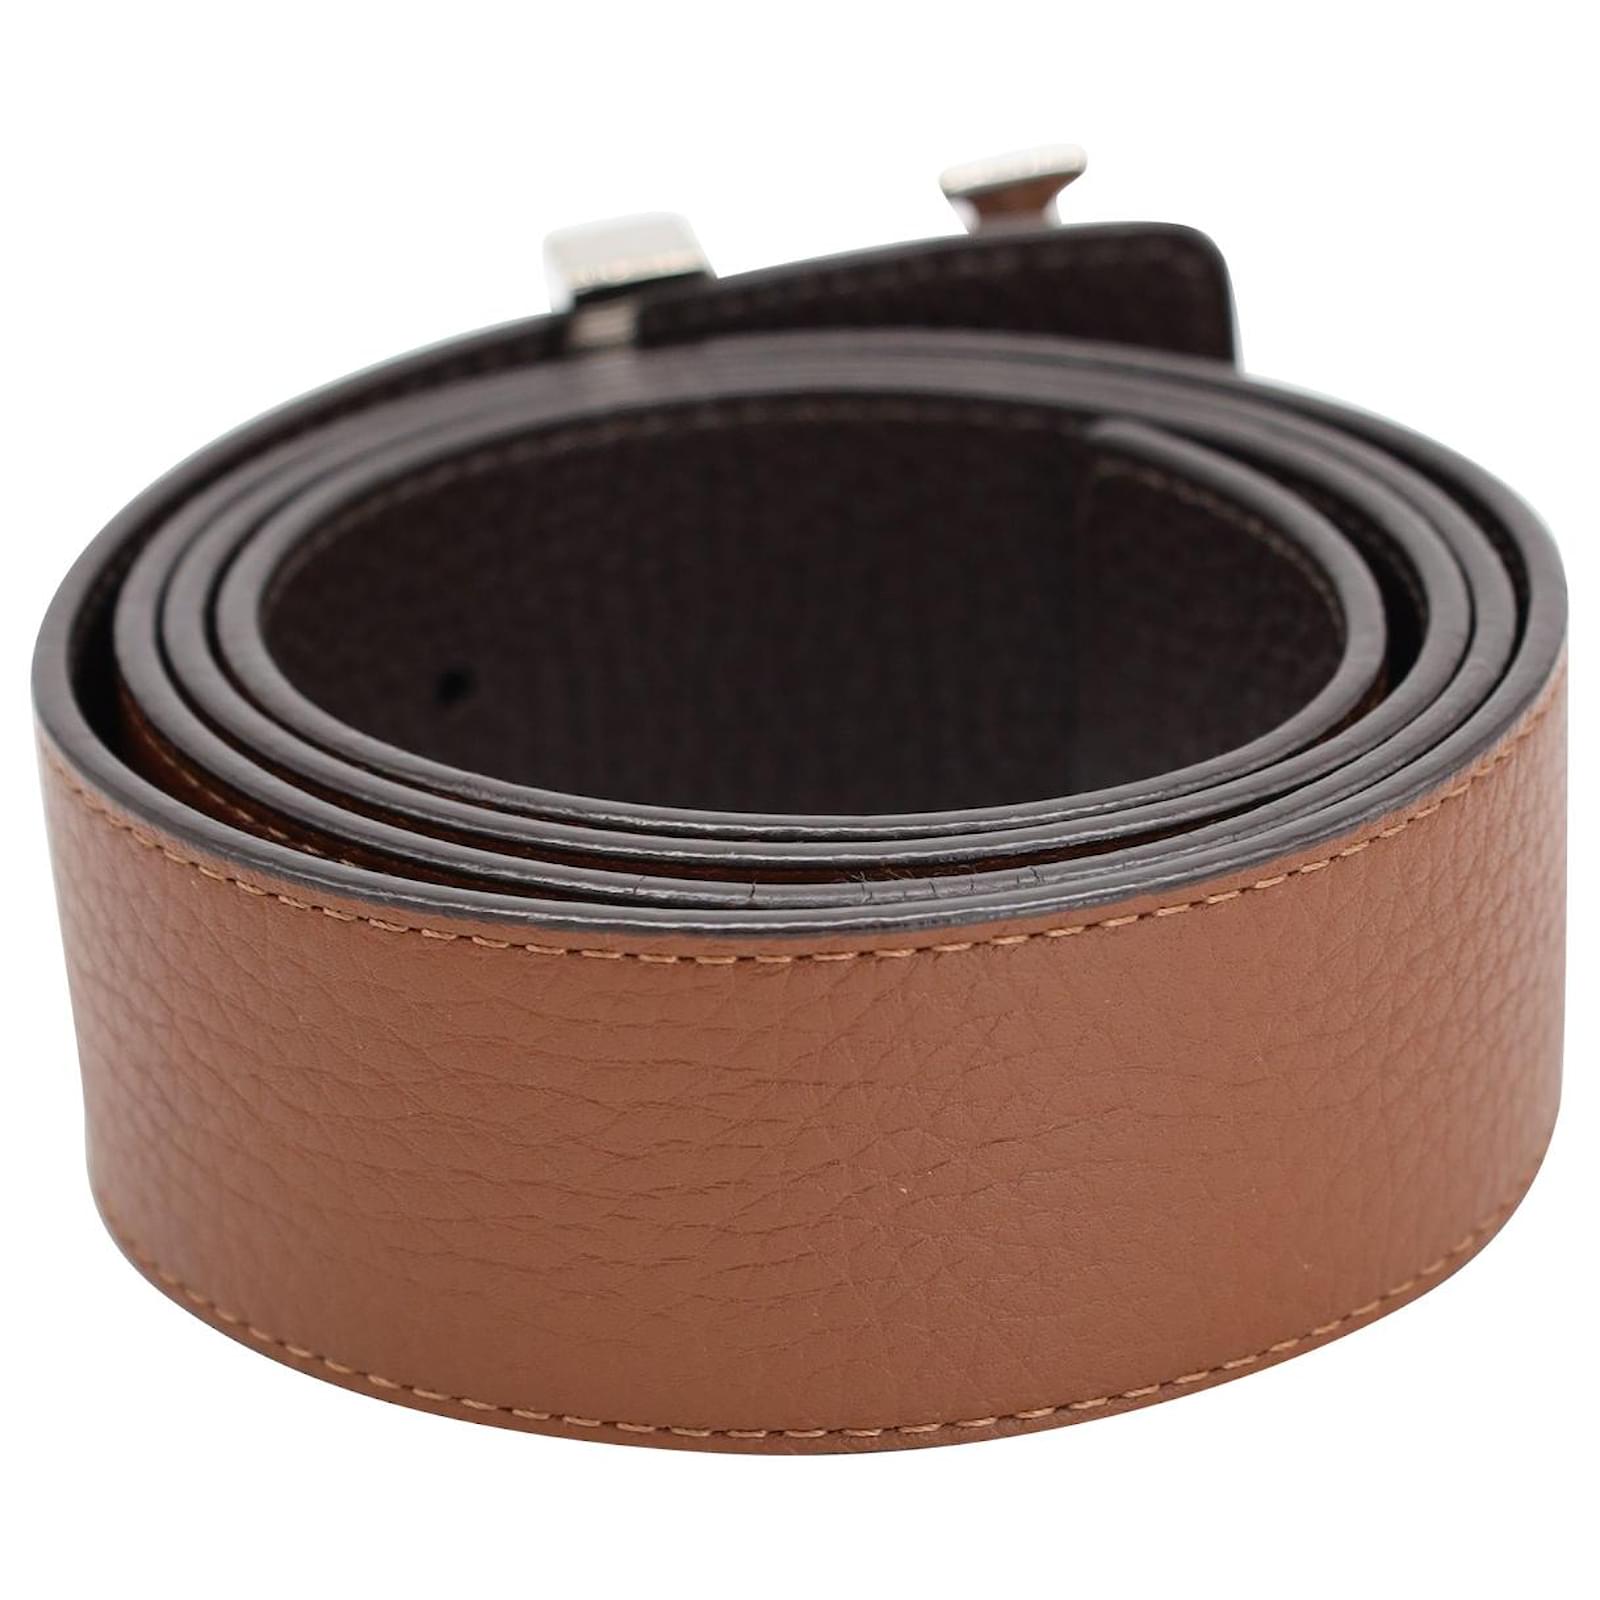 Belts Louis Vuitton Louis Vuitton Initiales 40mm Belt in Brown Leather